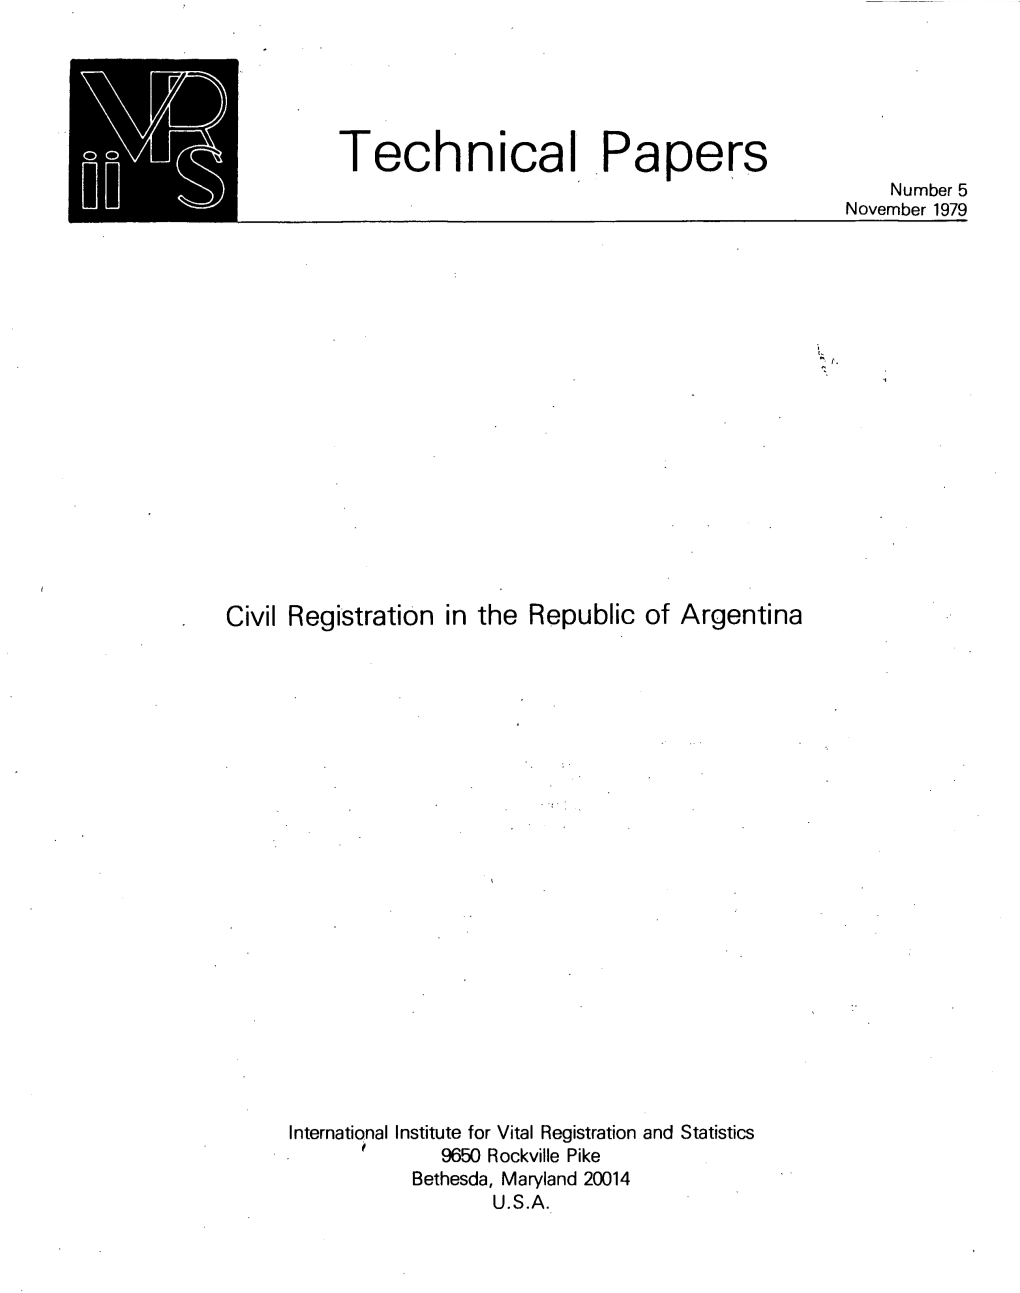 Civil Registration in the Republic of Argentina